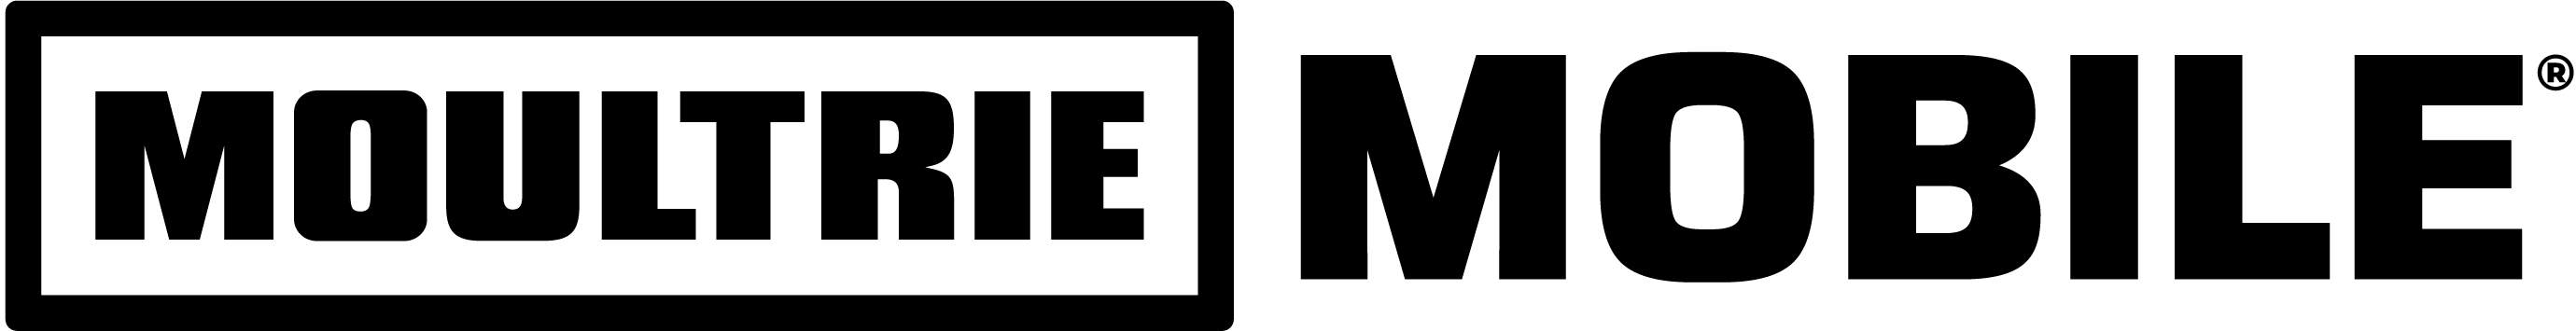 Moultrie Mobile logo